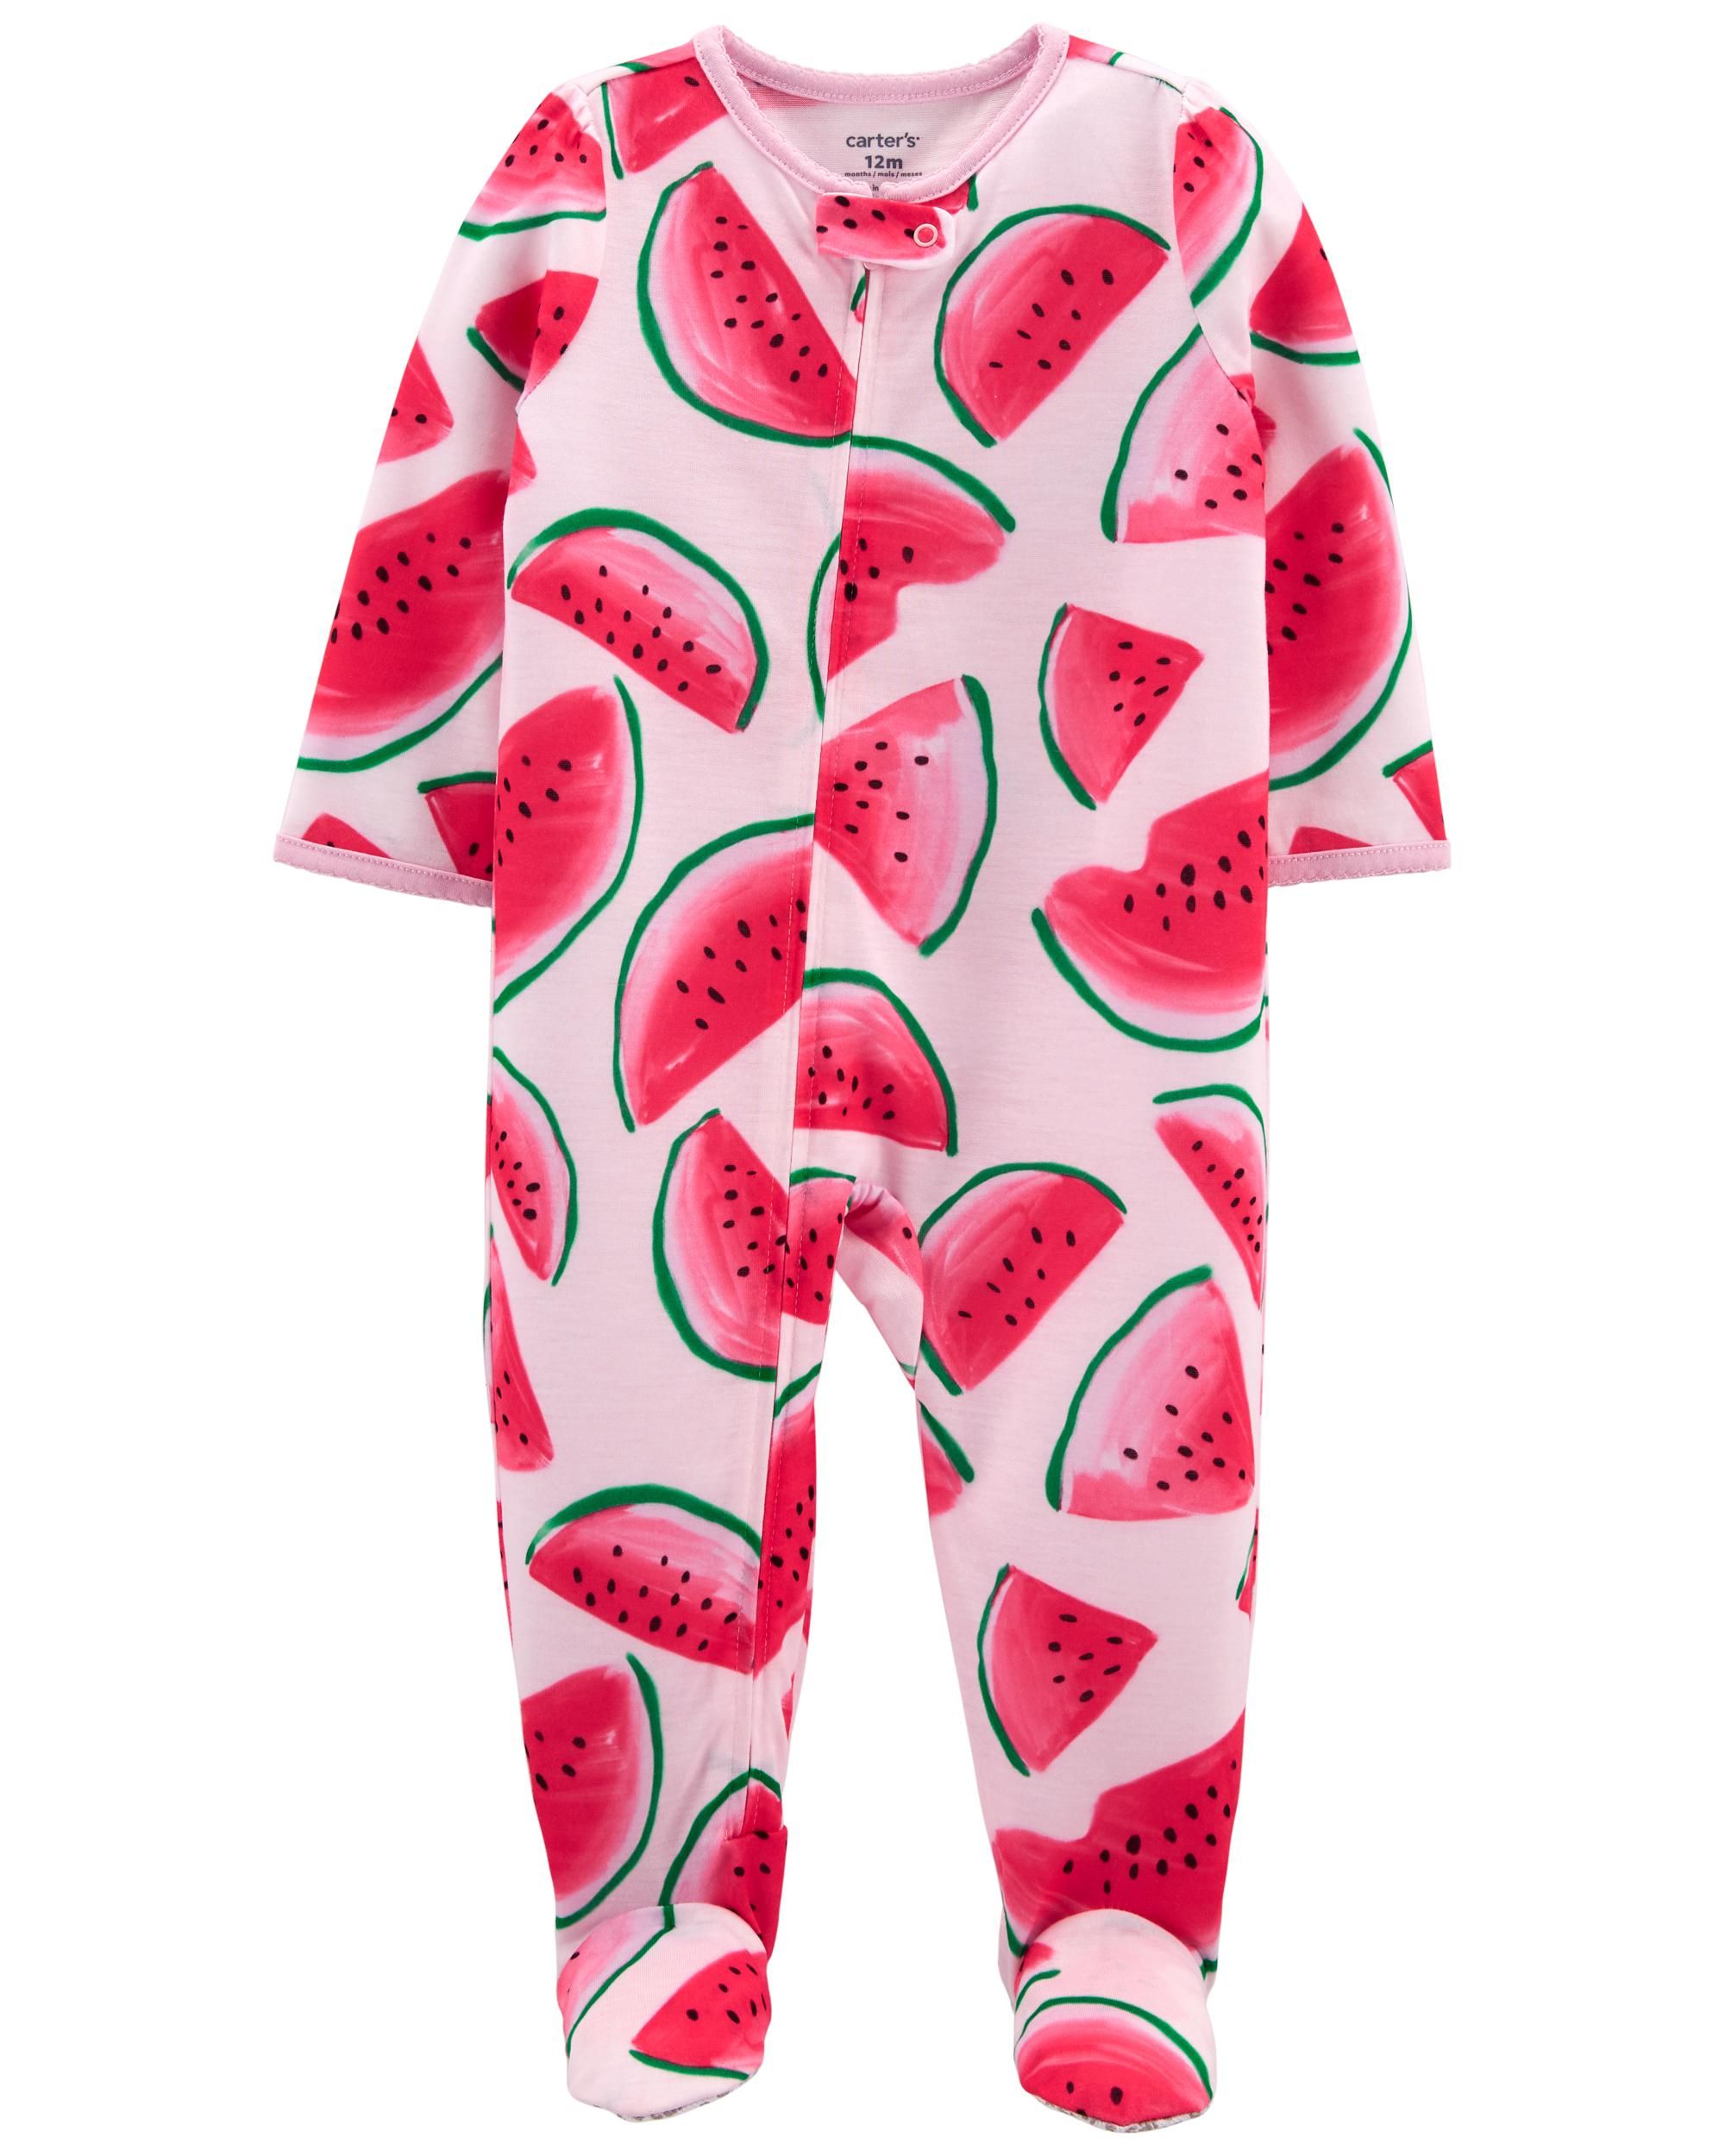 1-Piece Watermelon Loose Fit Footie PJs | Carter's